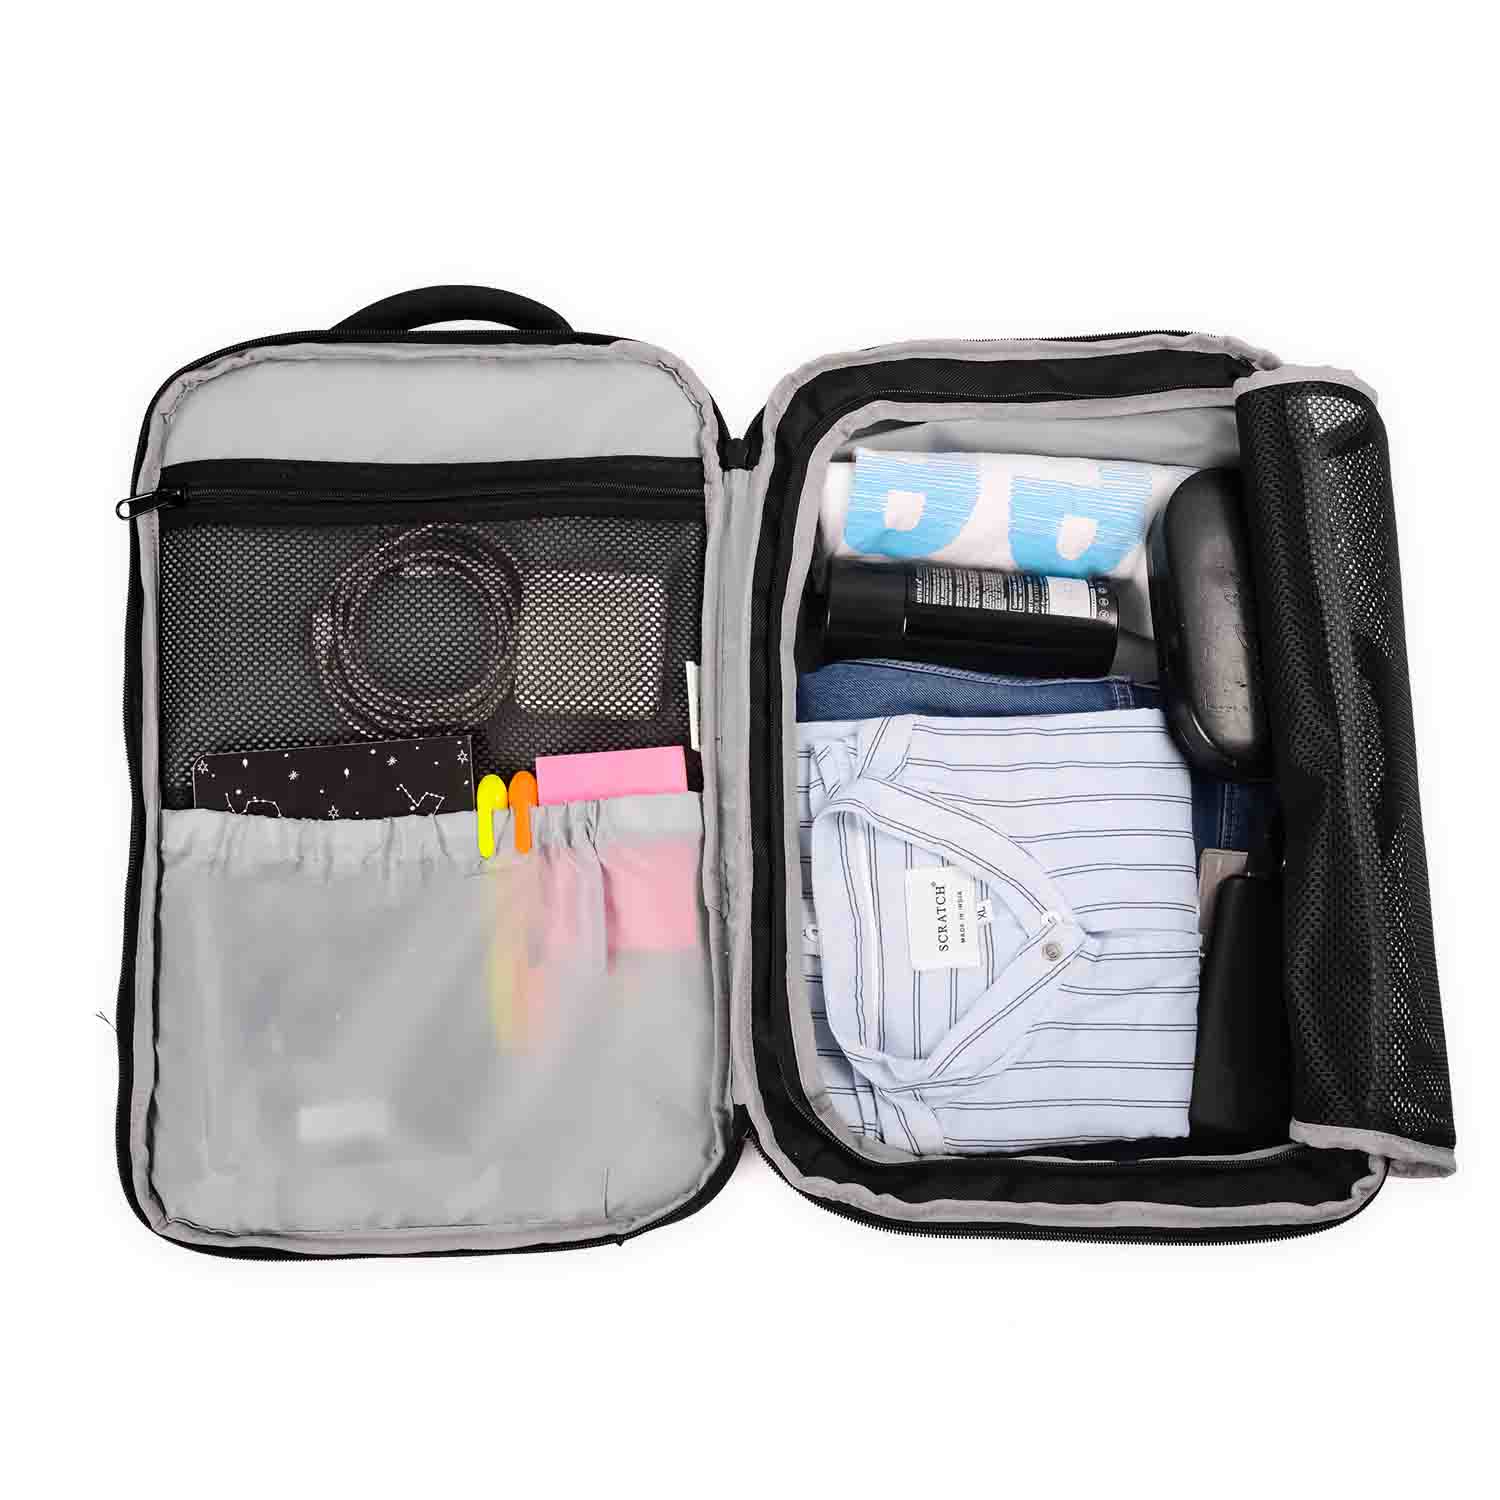 Timus-Lifestyle-backpacks-professional-laptop-backpack-london-london-laptop-backpack-5